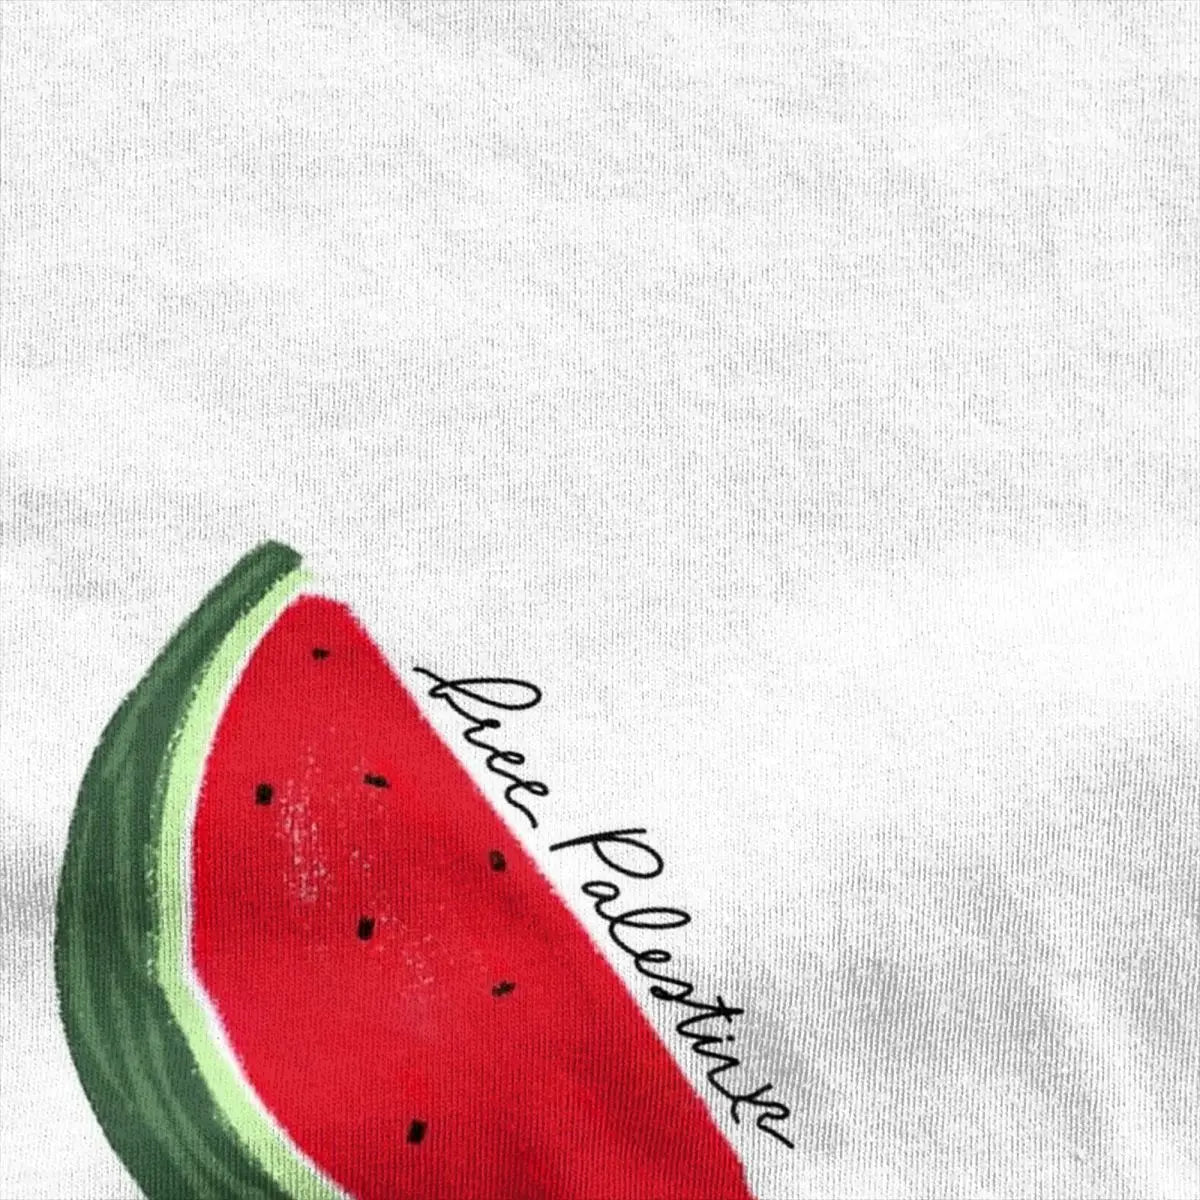 T-Shirt Free Palestine